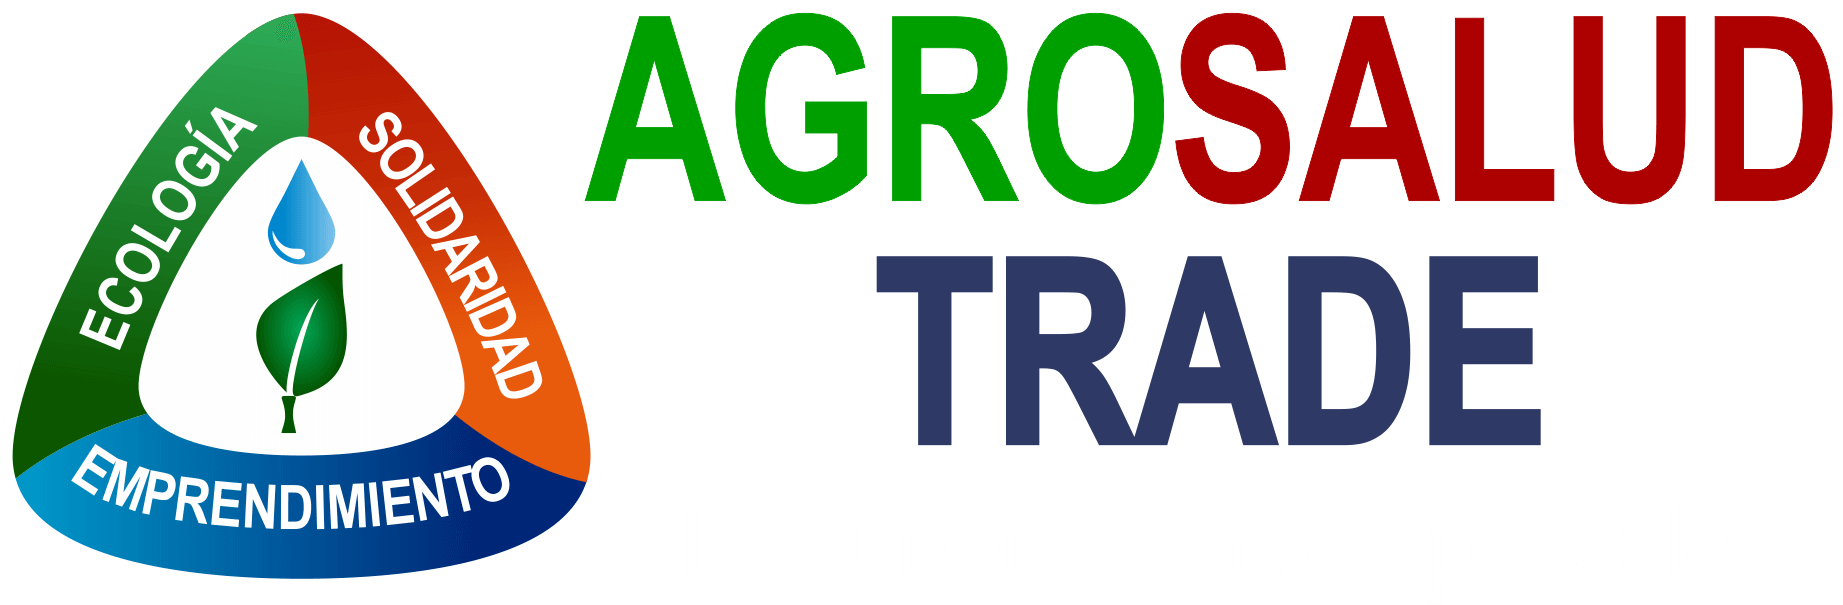 Agrosalud Trade